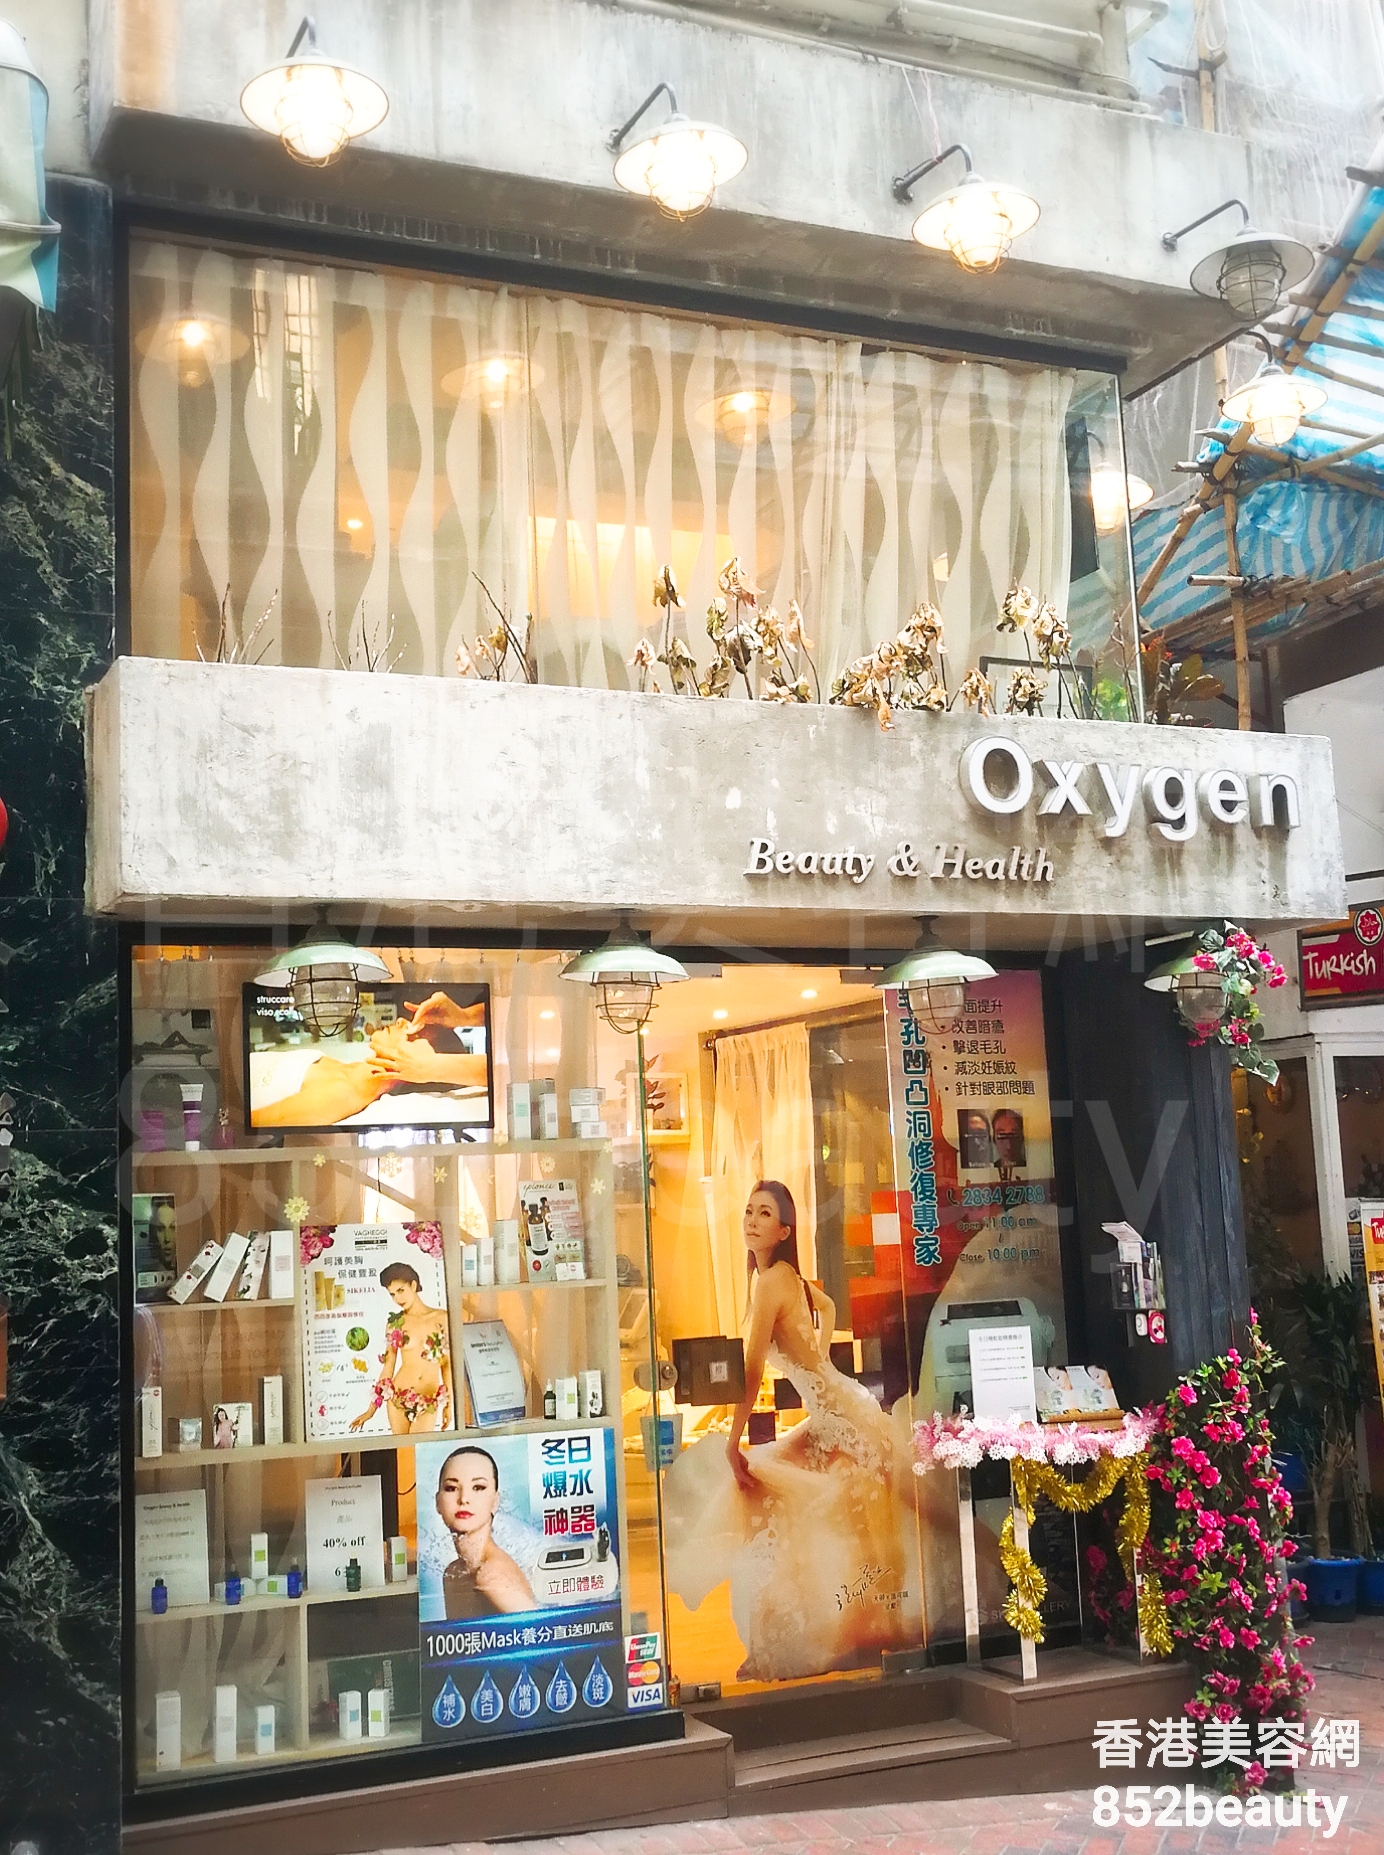 香港美容網 Hong Kong Beauty Salon 美容院 / 美容師: Oxygen Beauty & Health